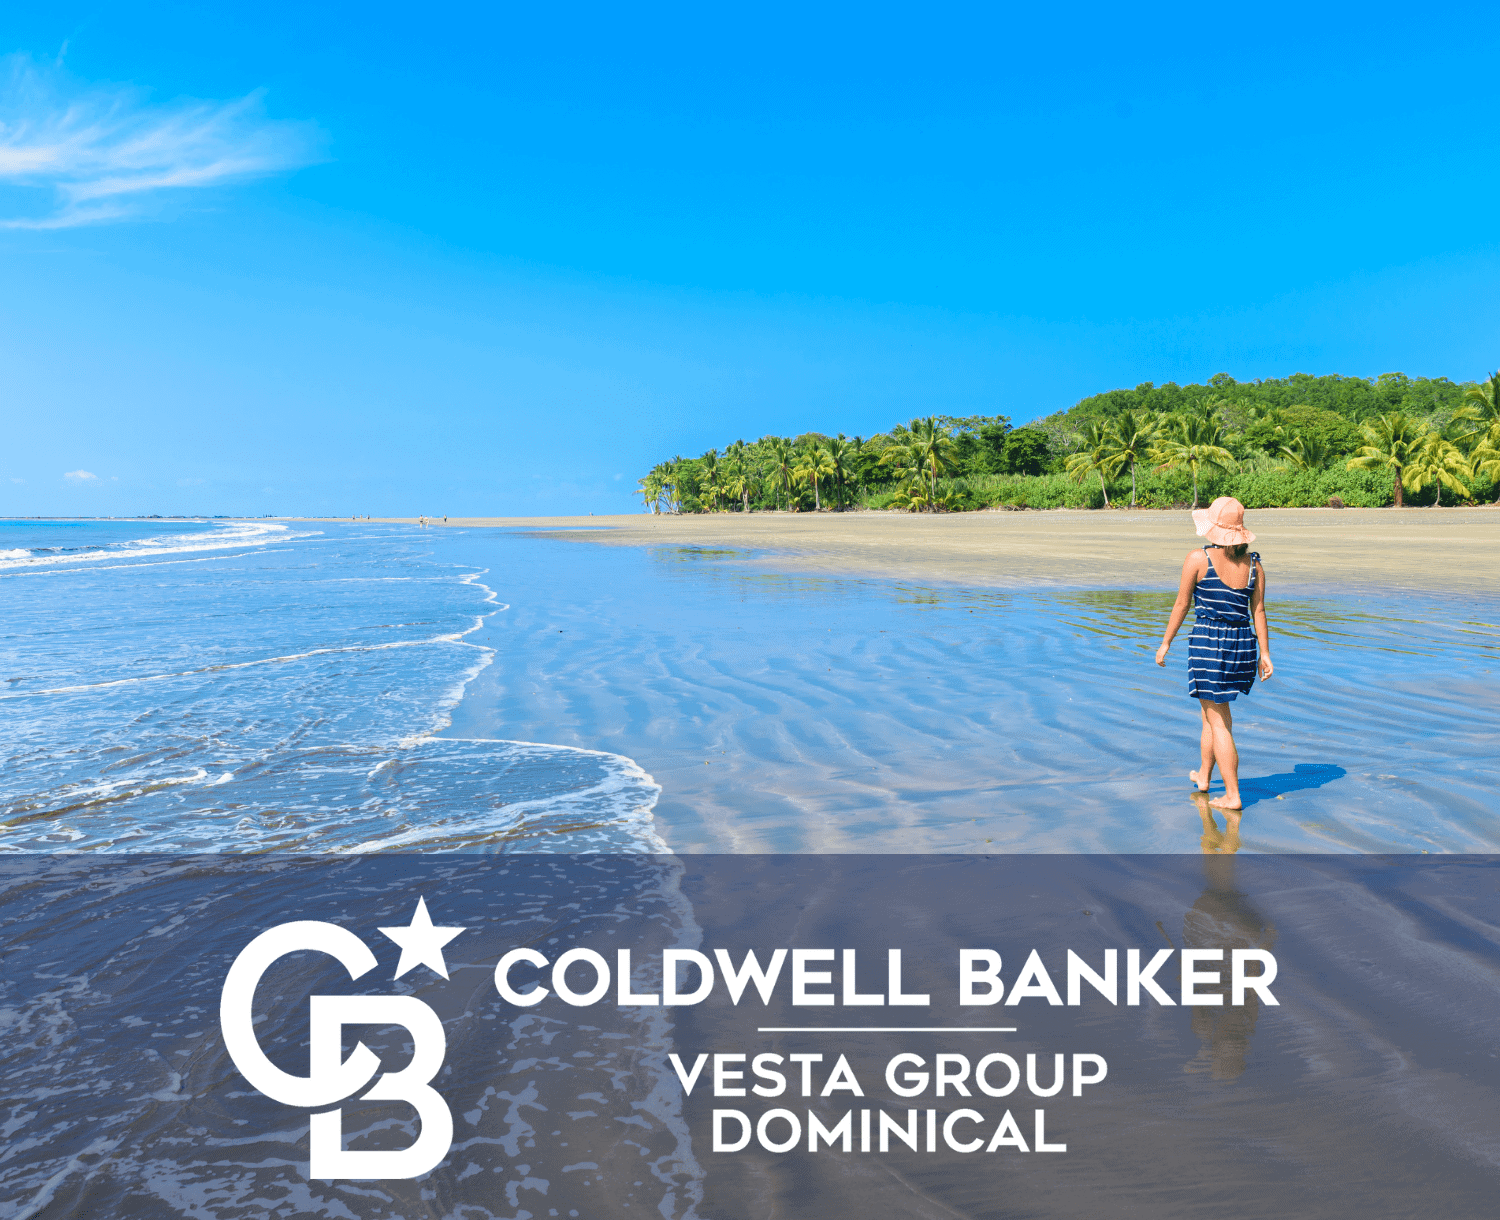 Coldwell Banker Vesta Group Dominical